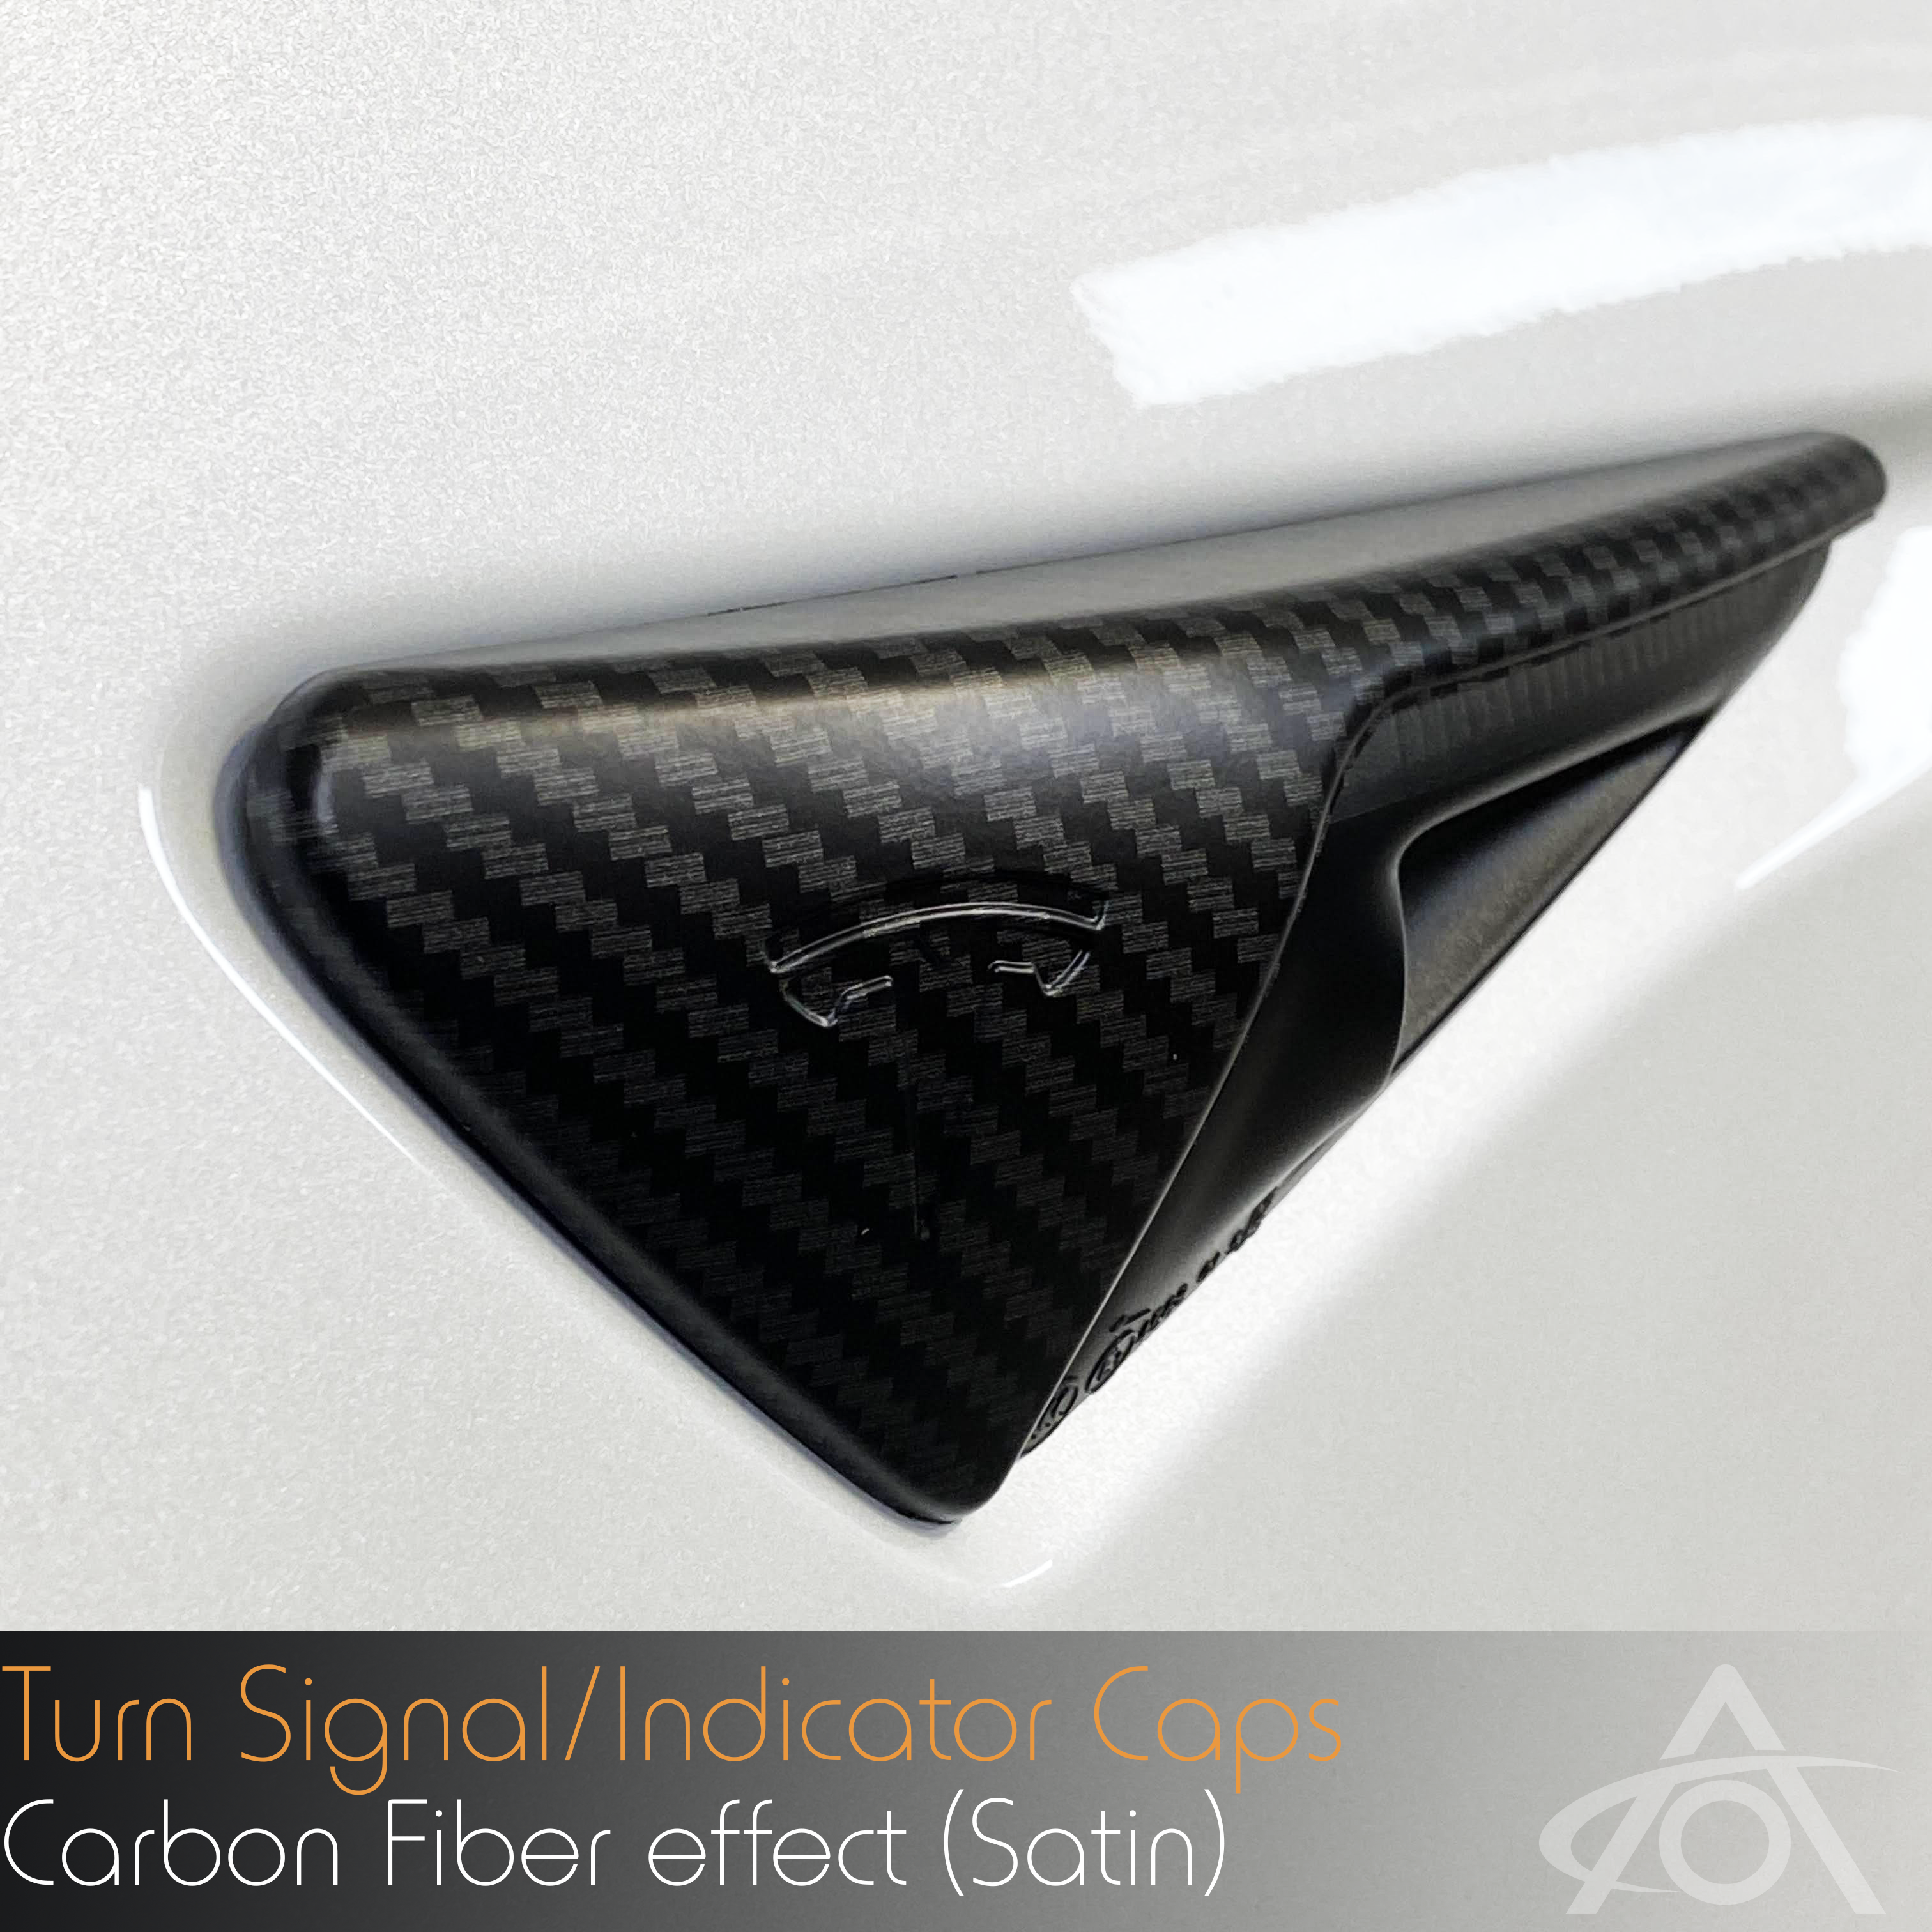 Carbon Fiber Turn Signal (indicator) Caps